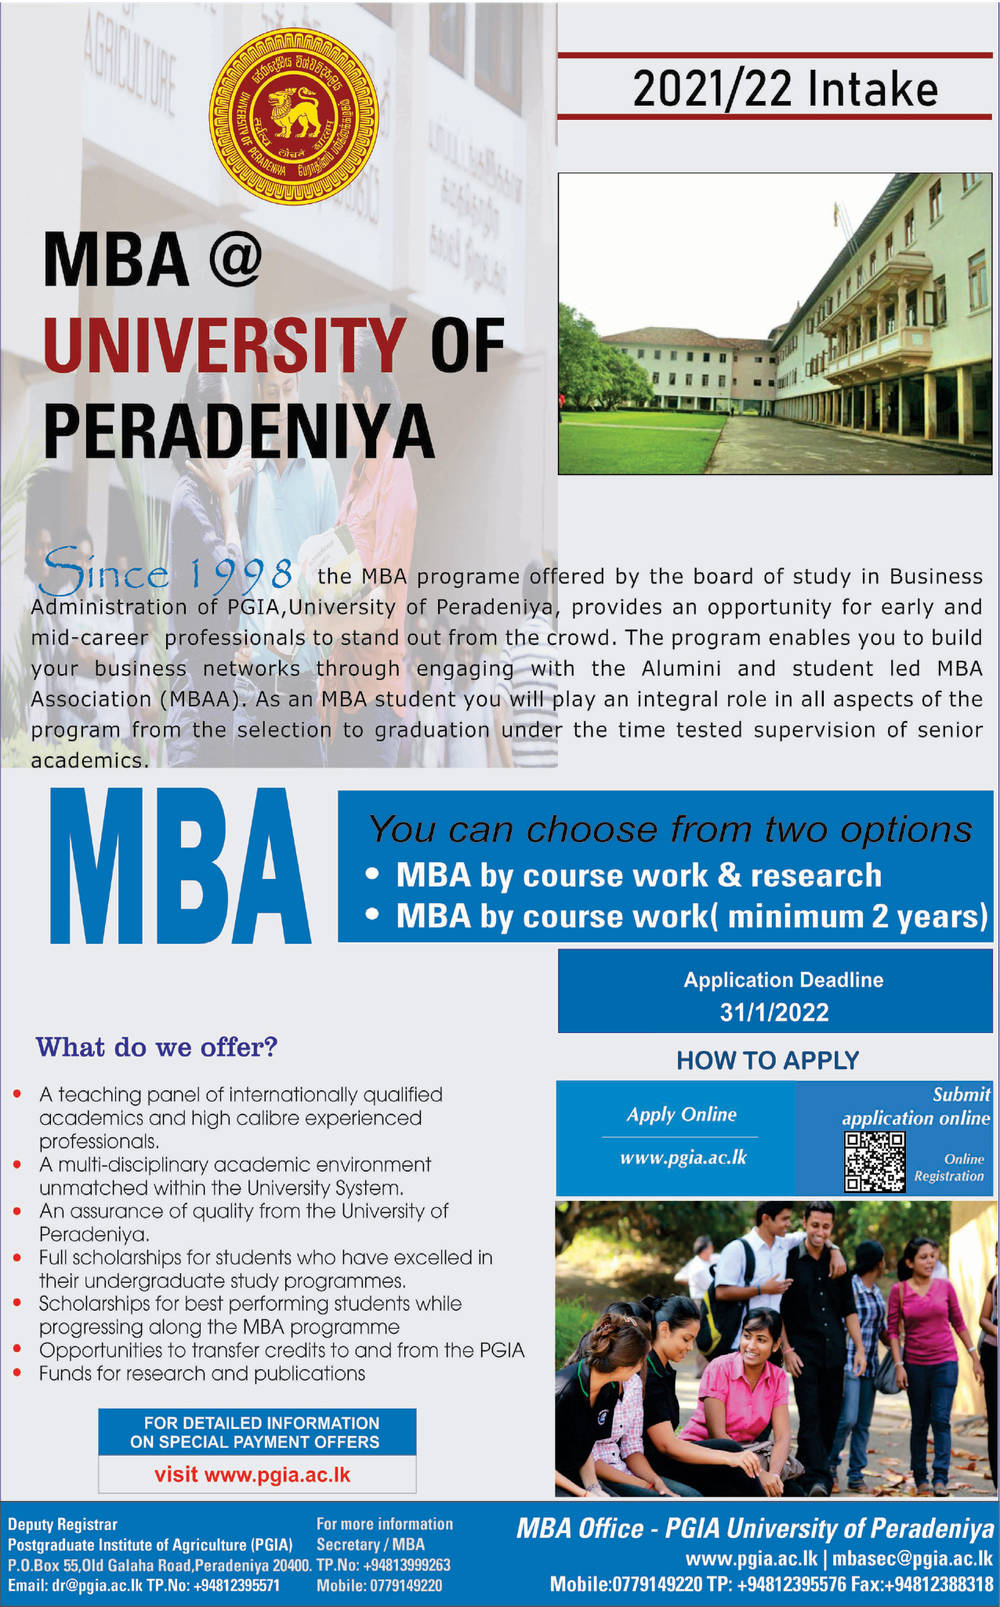 Master of Business Administration (MBA) 2021/2022 - University of Peradeniya